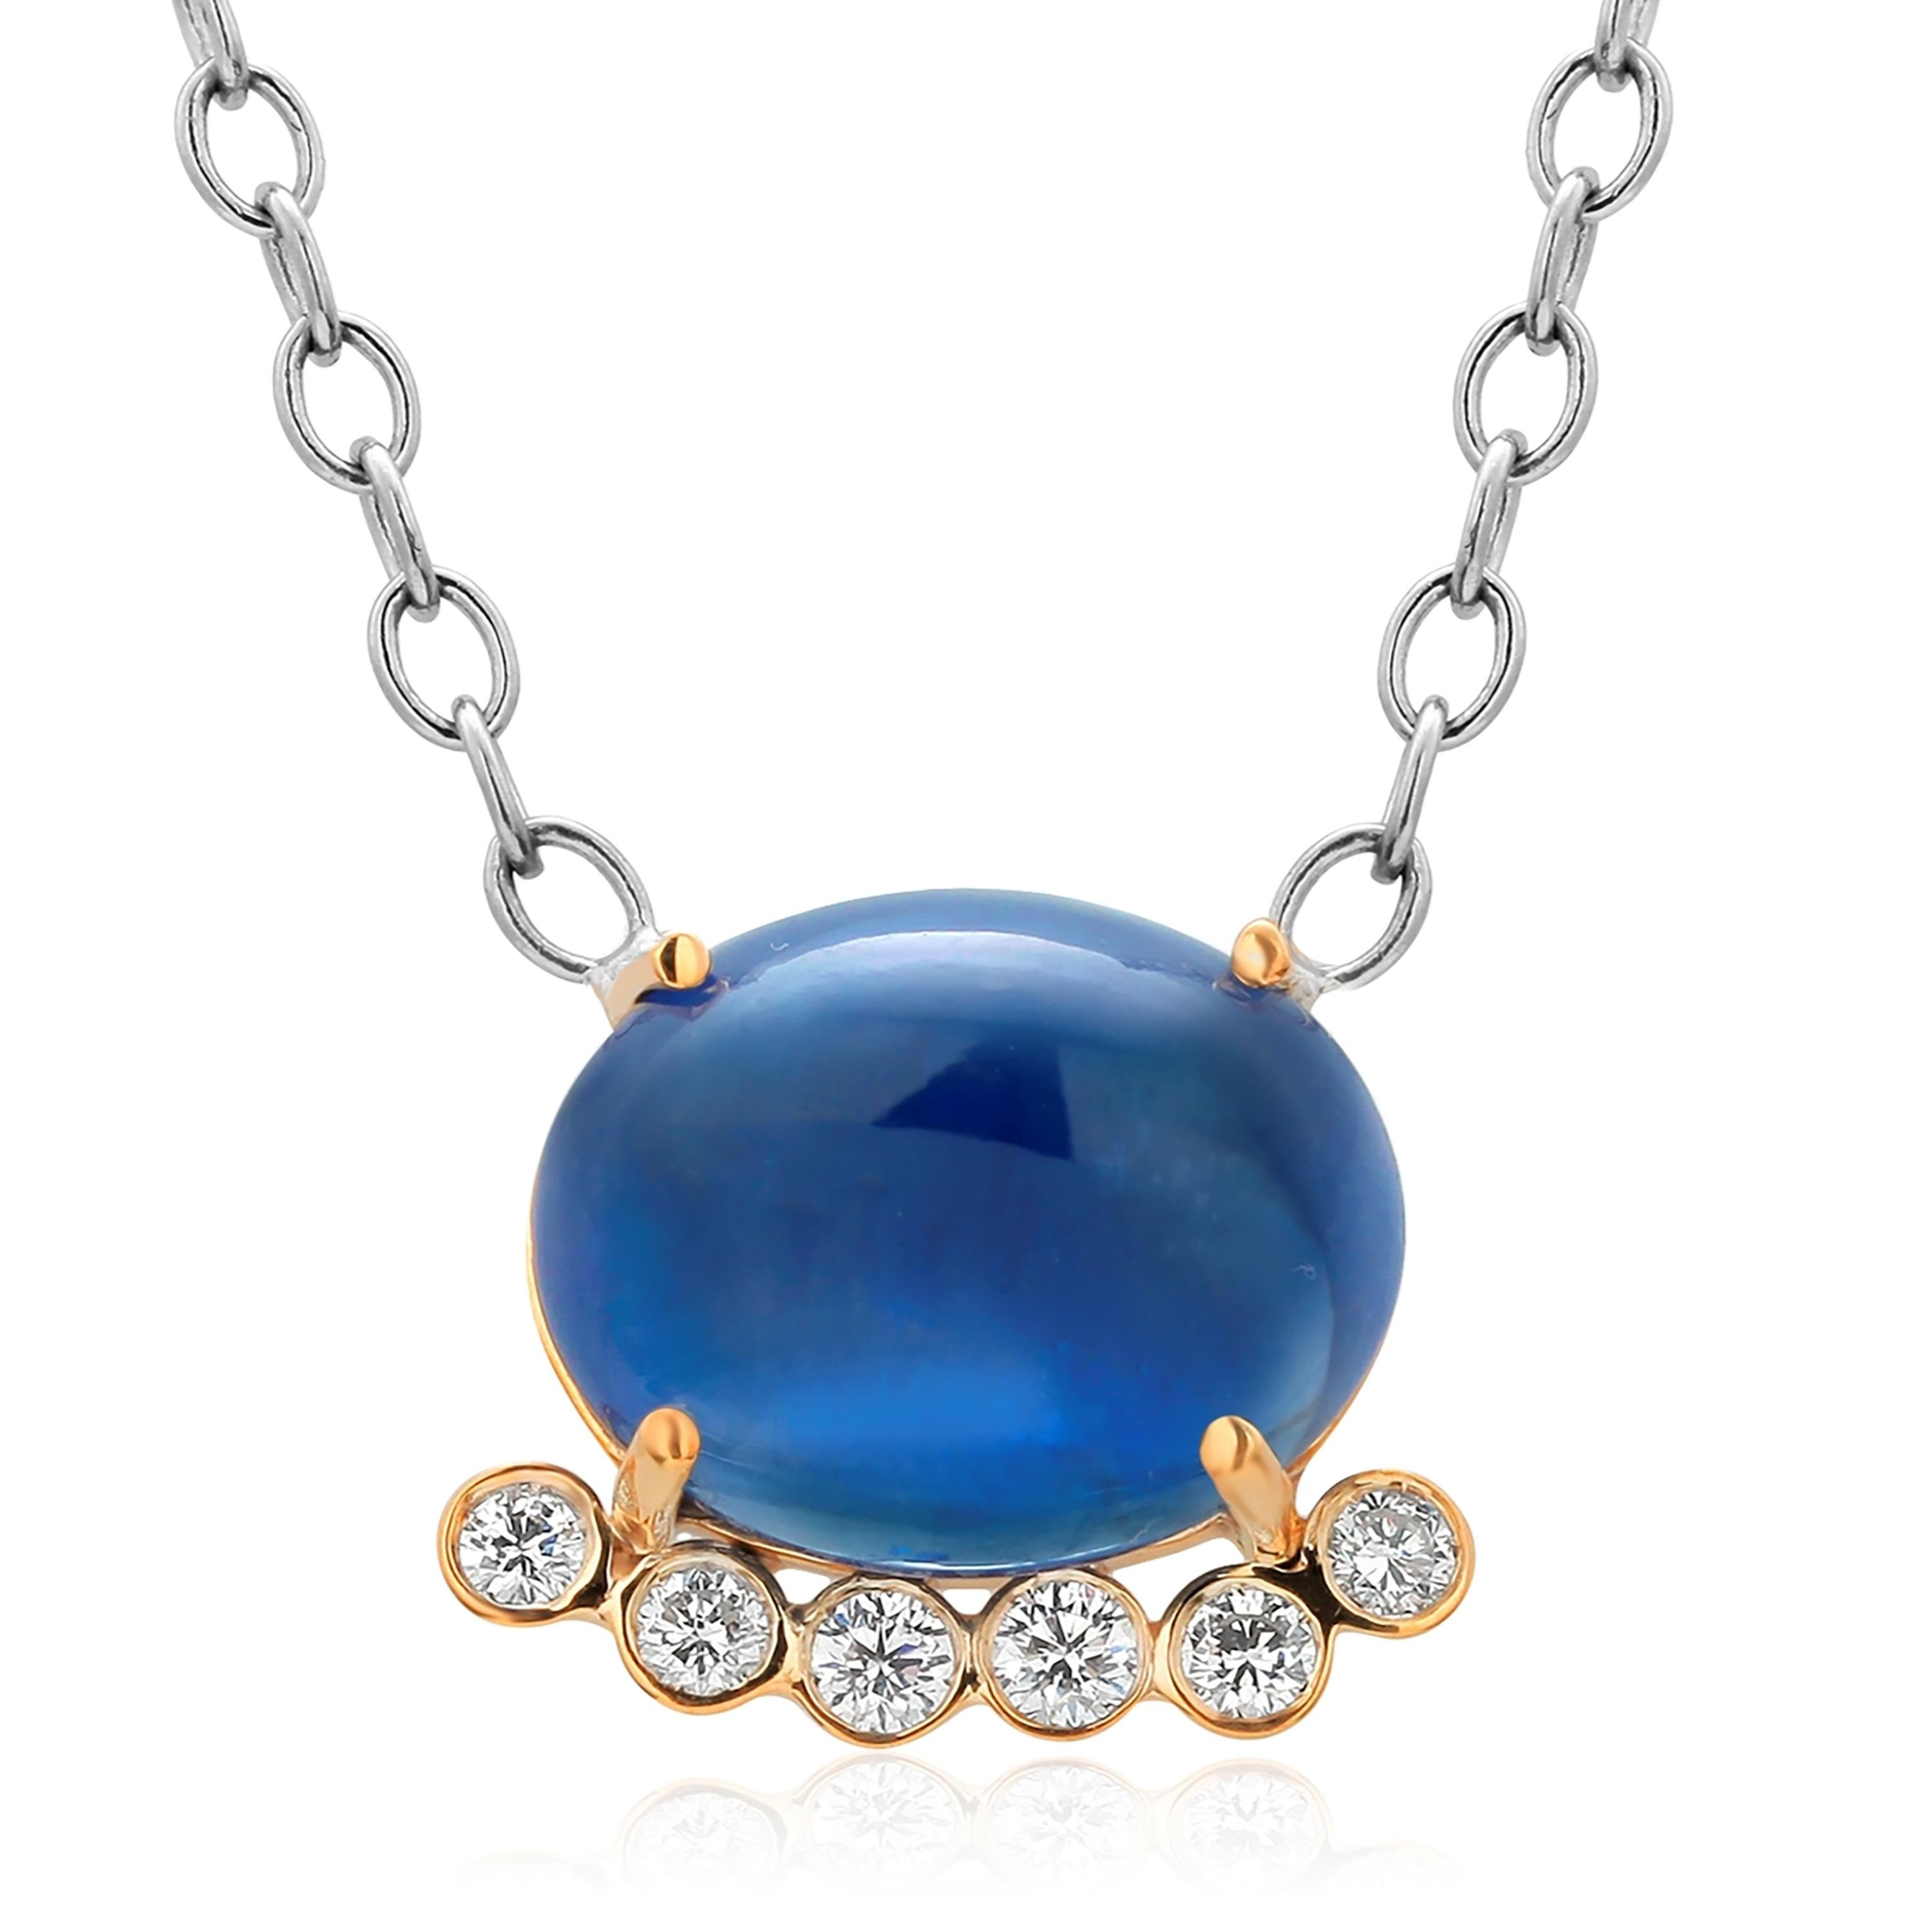 Oval Cut Cabochon Ceylon Sapphires and Diamonds Eighteen Karat Gold Necklace Pendant